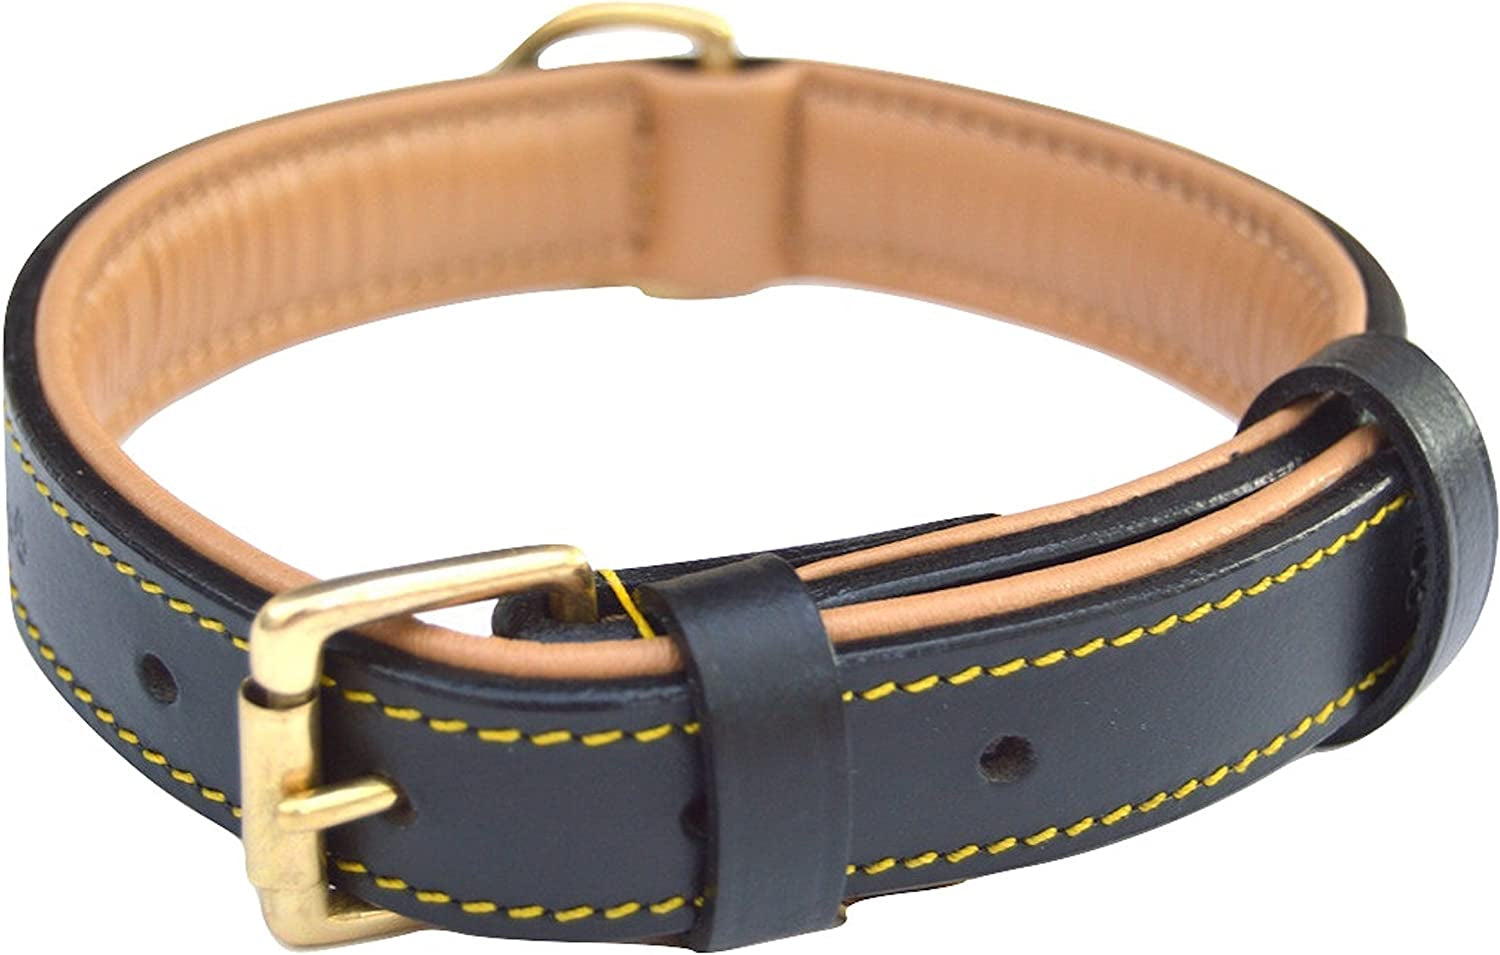 Padded Leather Dog Collar - Everyday-Sales.com